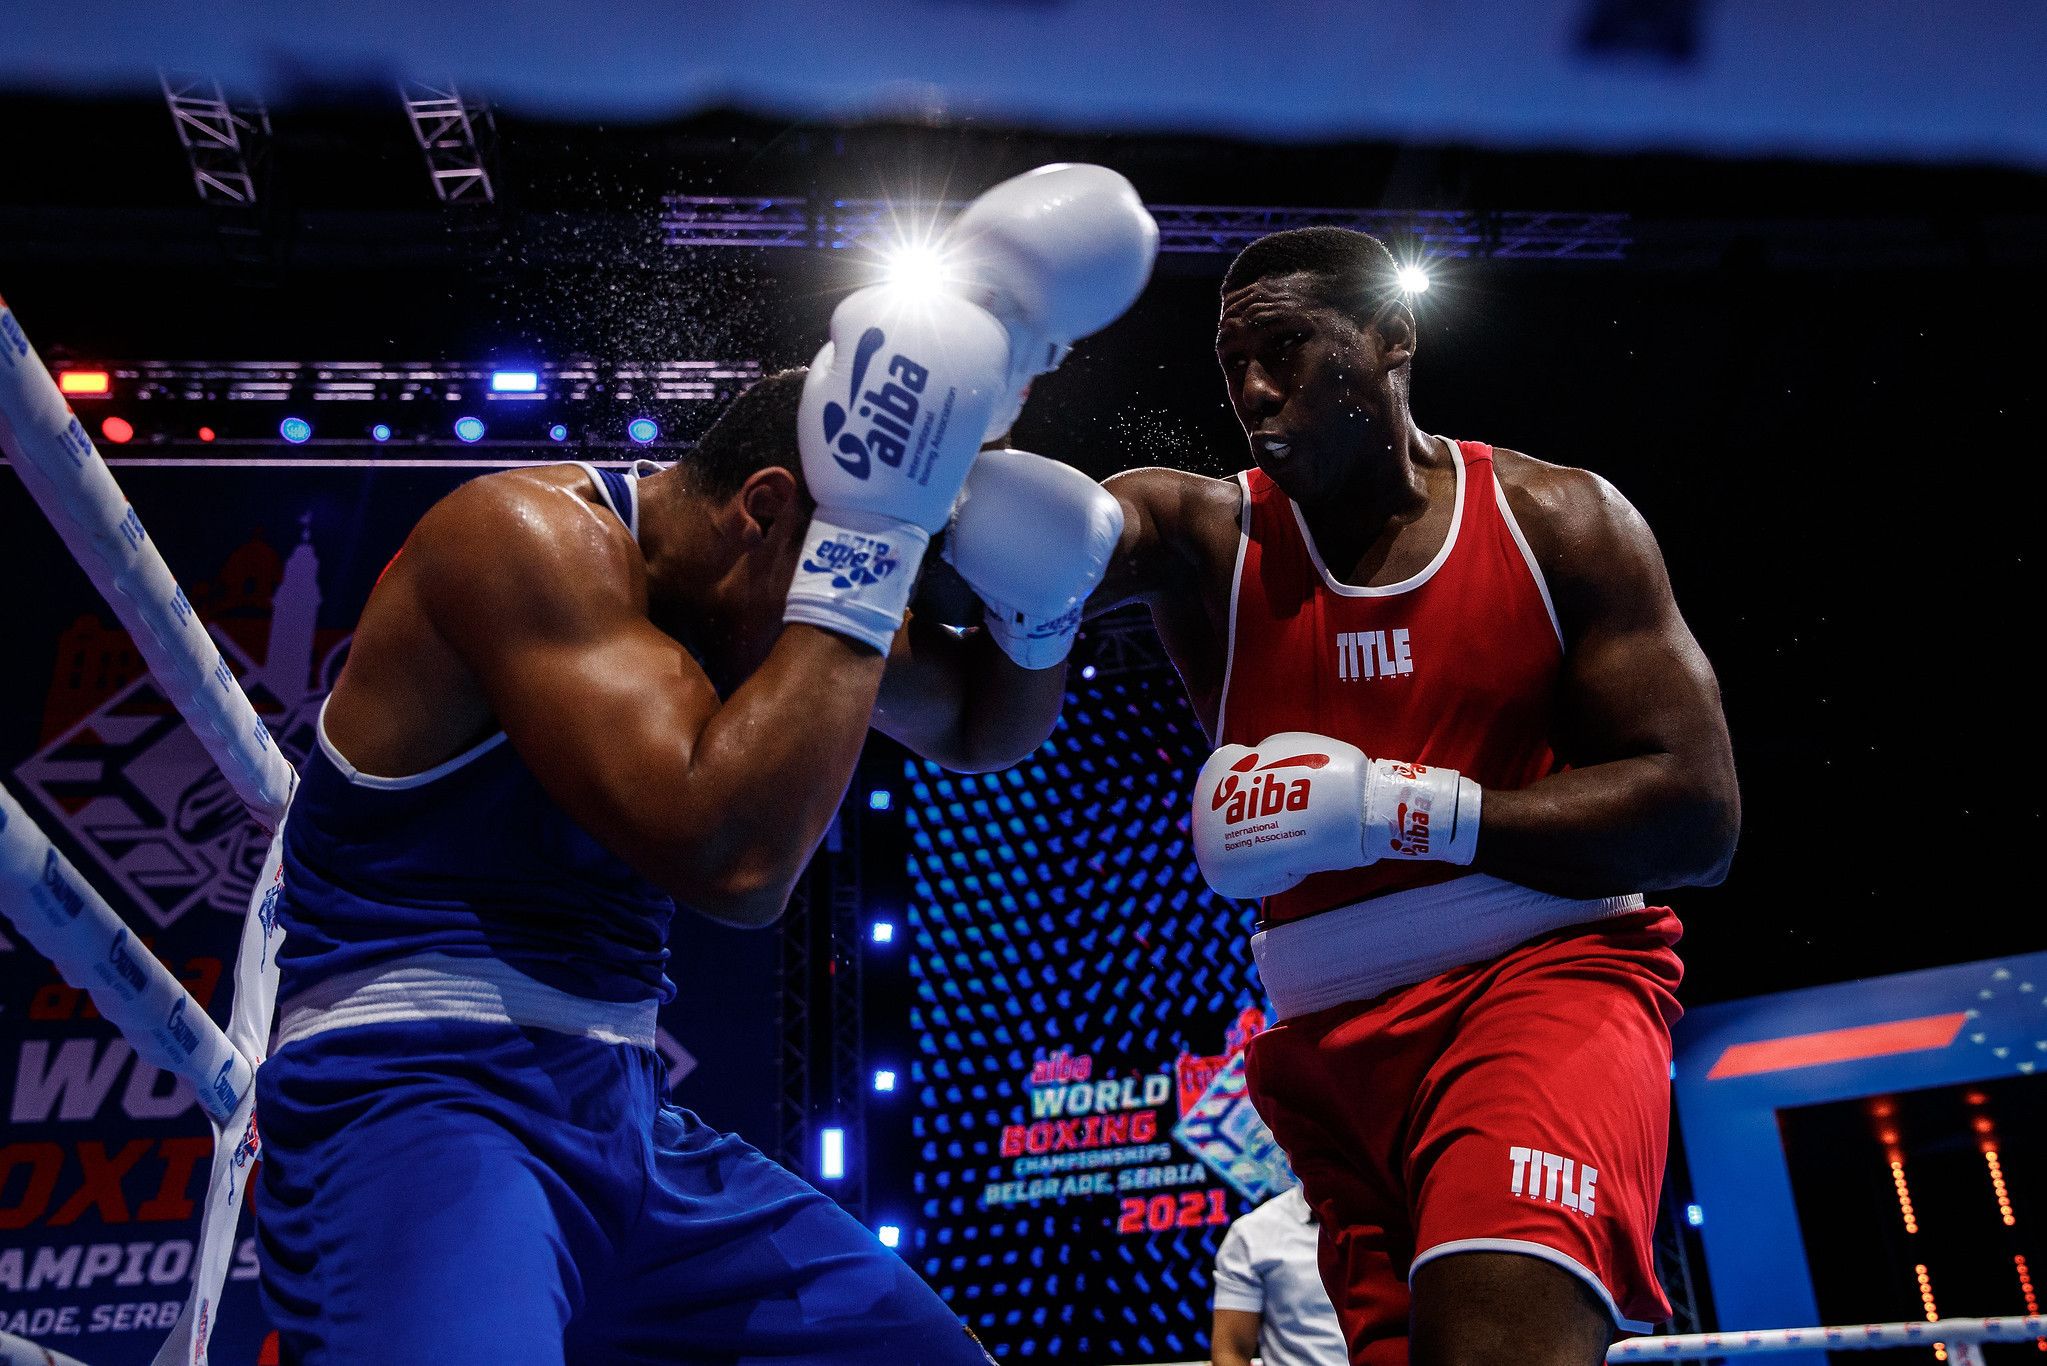 Nigel Paul is guaranteed Trinidad and Tobago's first men's senior world boxing medal ©AIBA